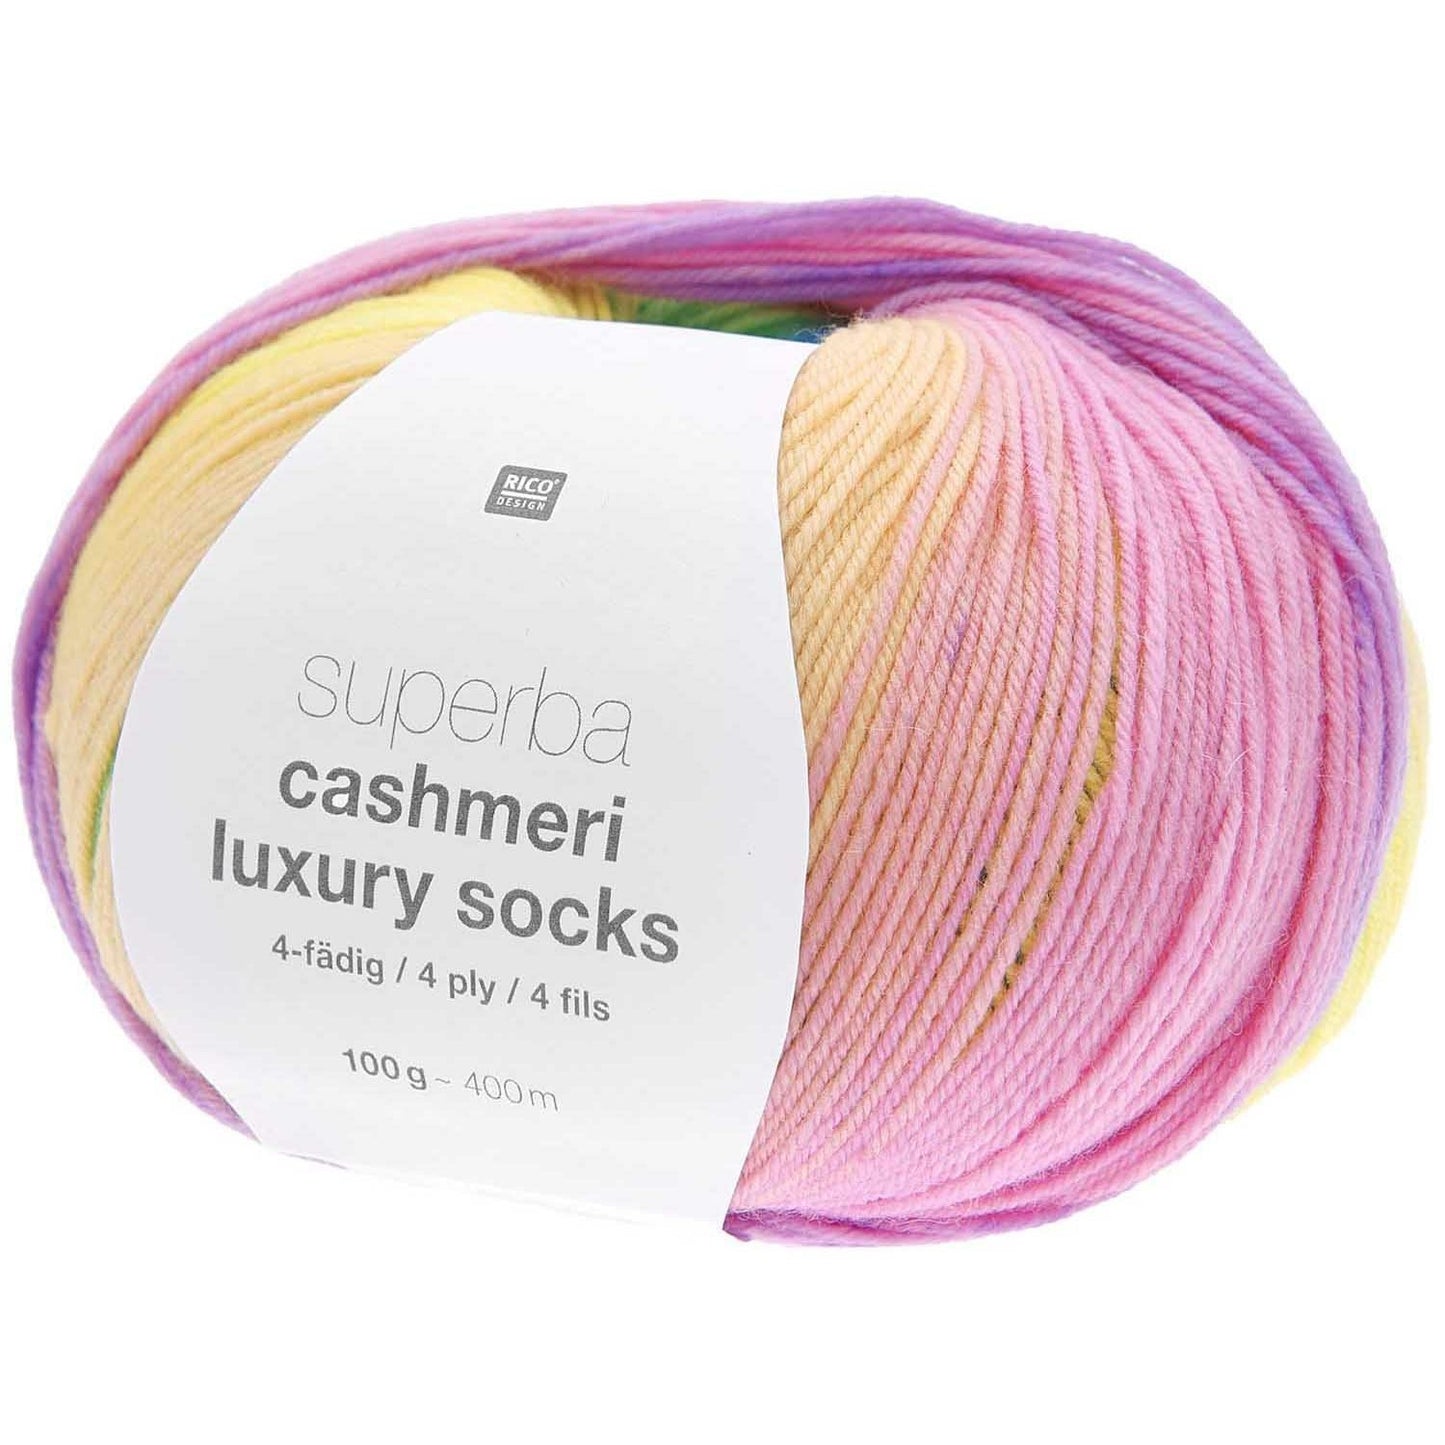 Superba Cashmeri Luxury Socks | Rico Design